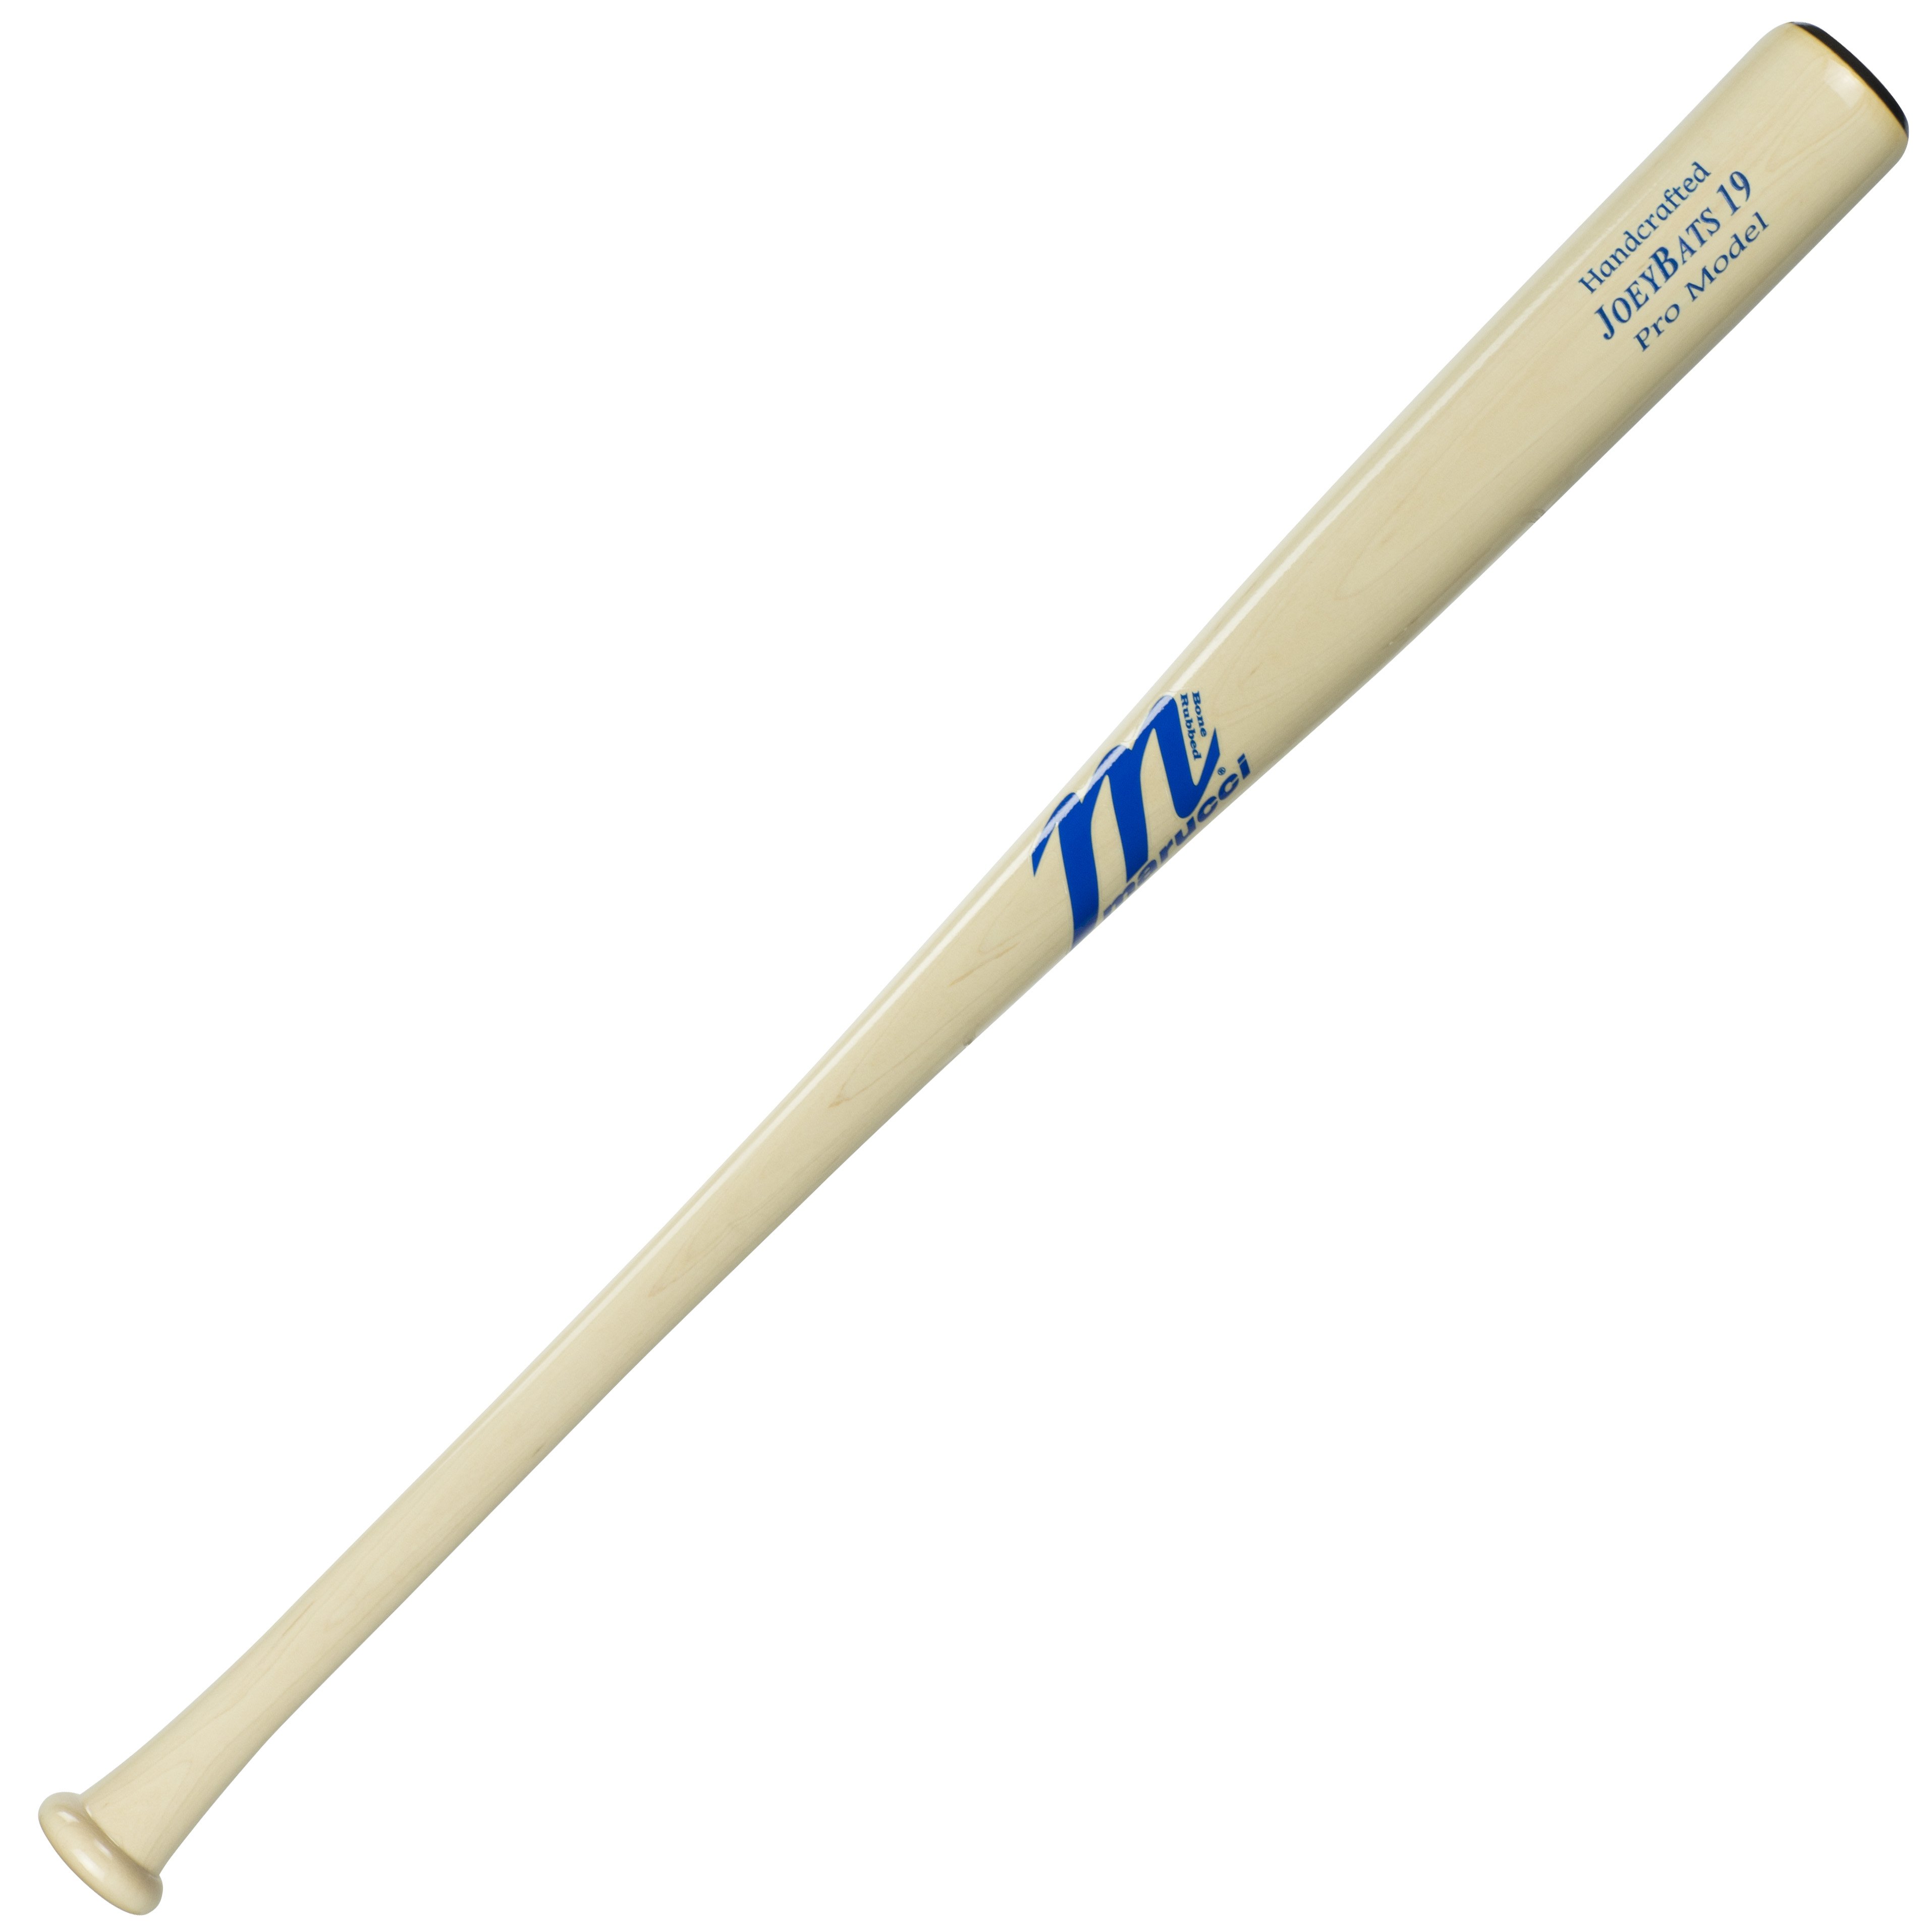 Marucci Joey Bats19 Pro Model Maple Wood Baseball Bat 